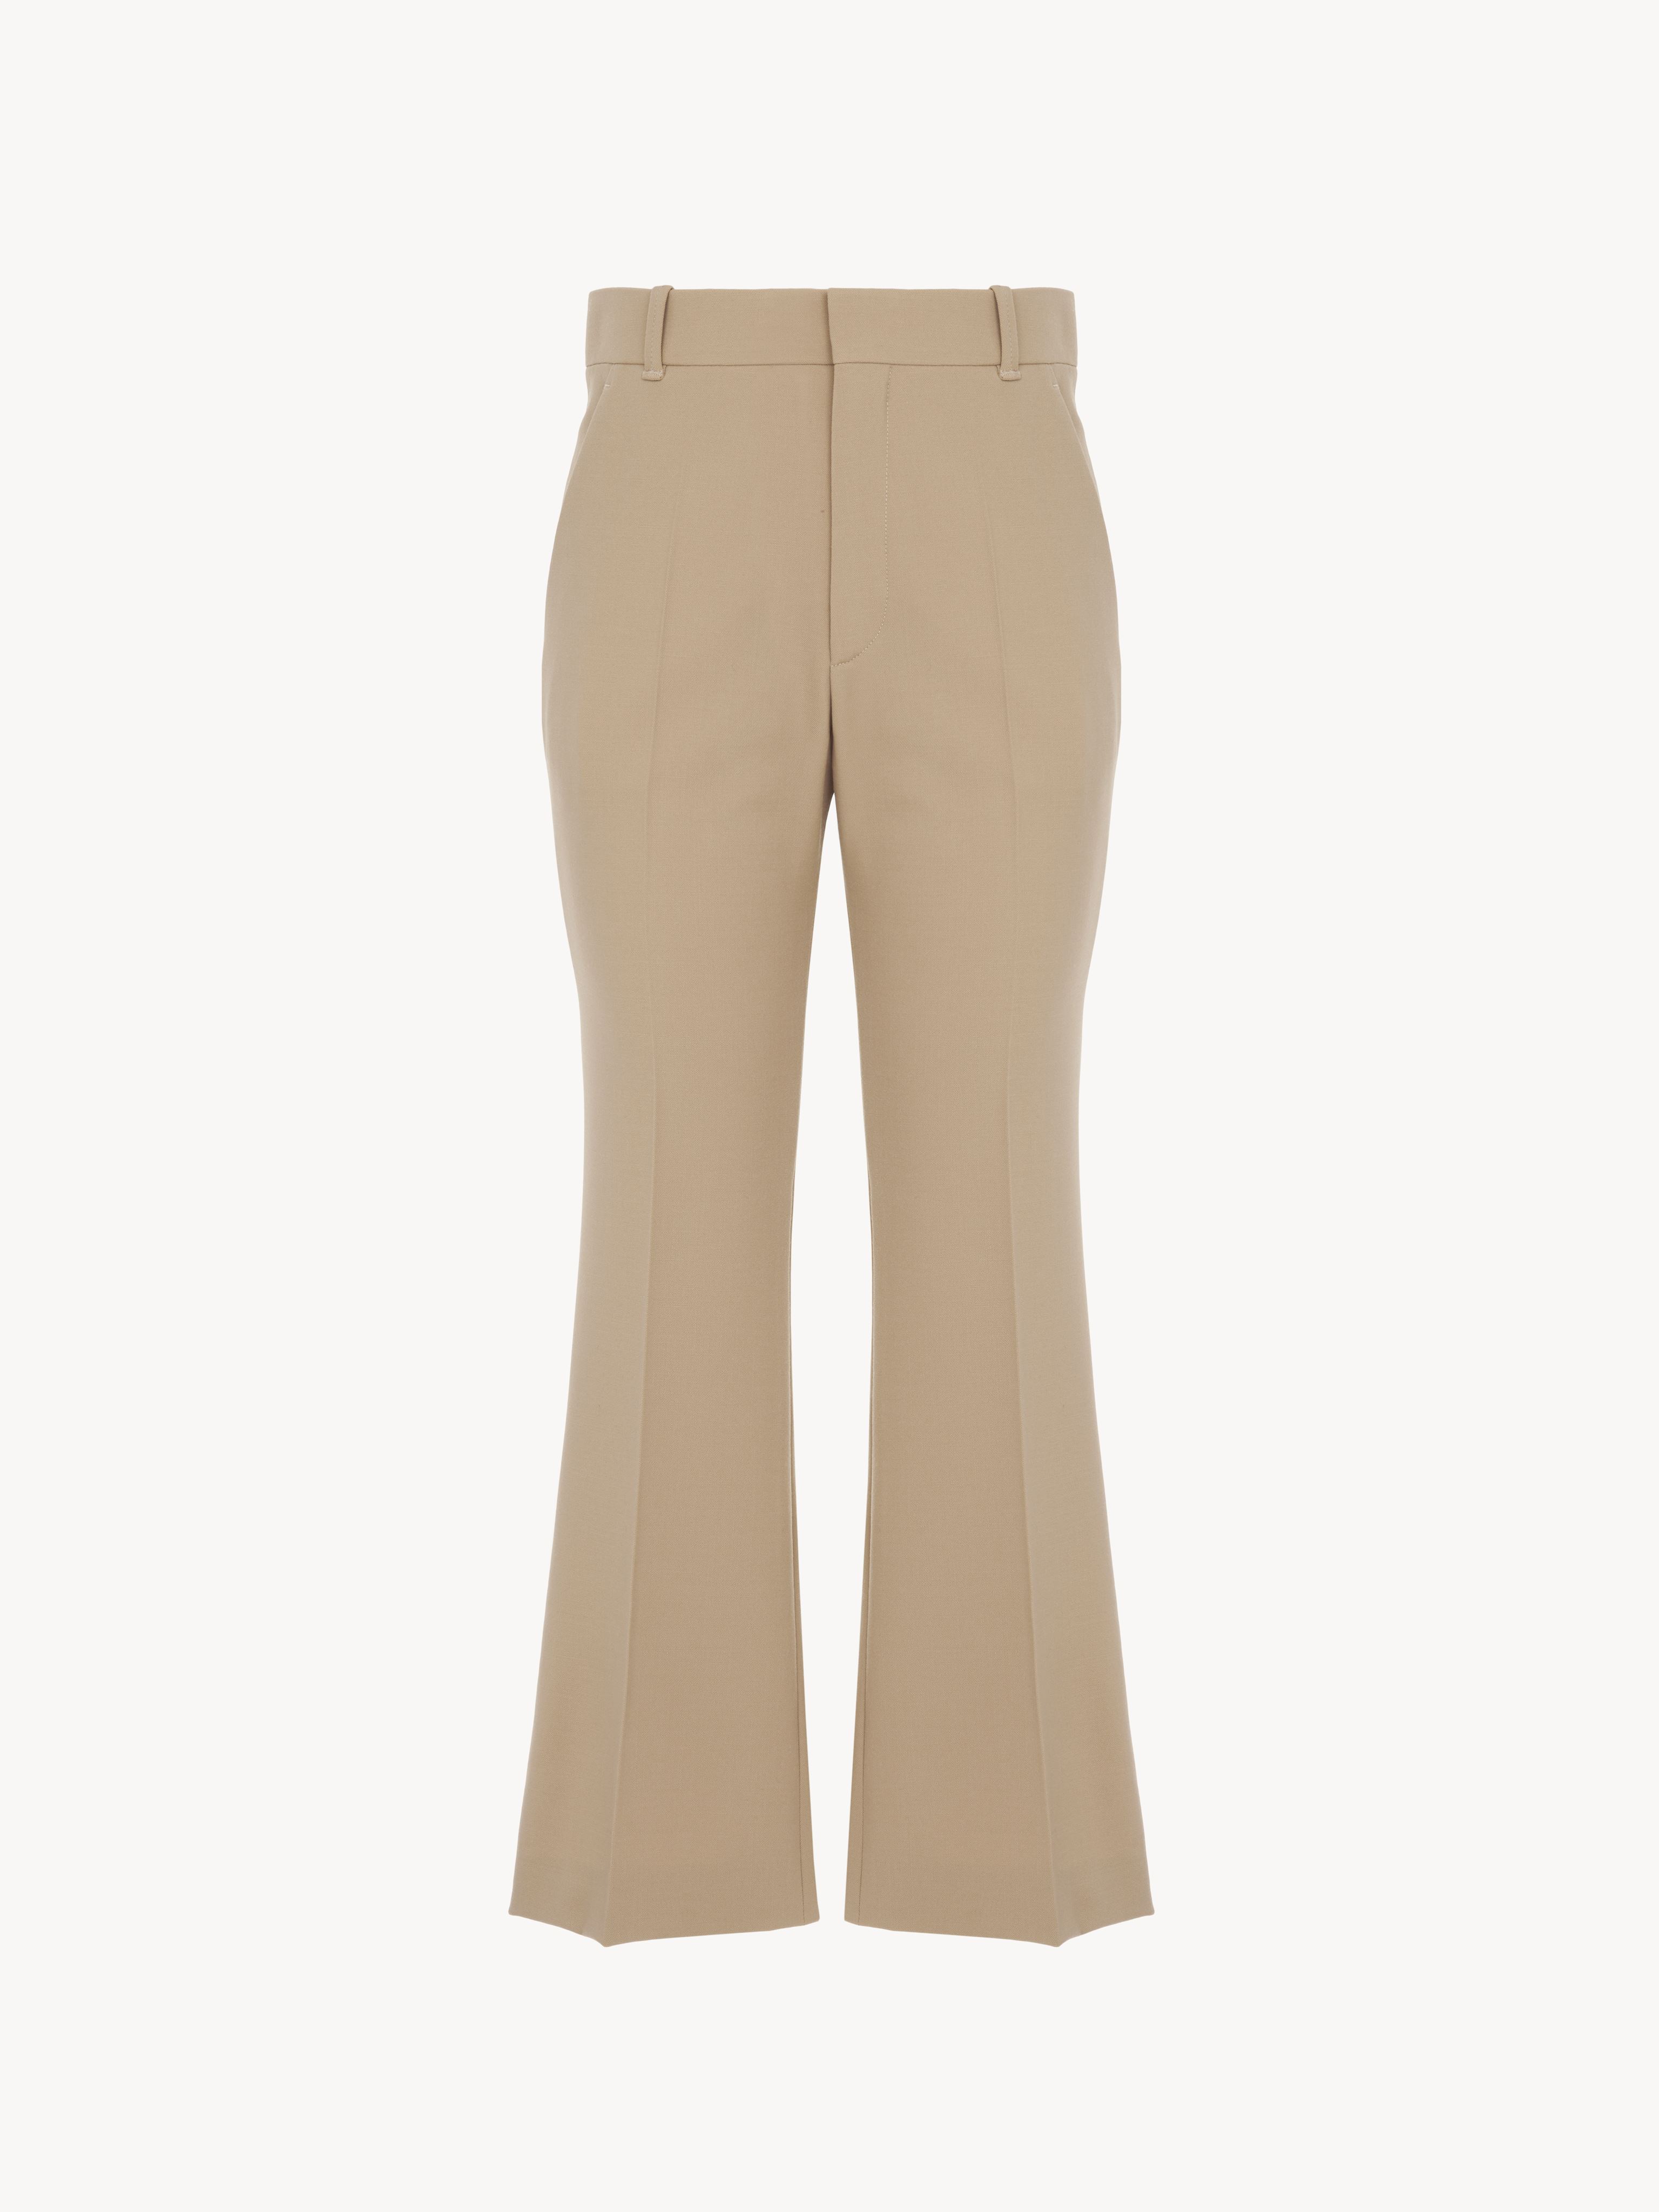 Chloé Cropped Bootcut Trousers Beige Size 8 95% Virgin Wool, 5% Elastane